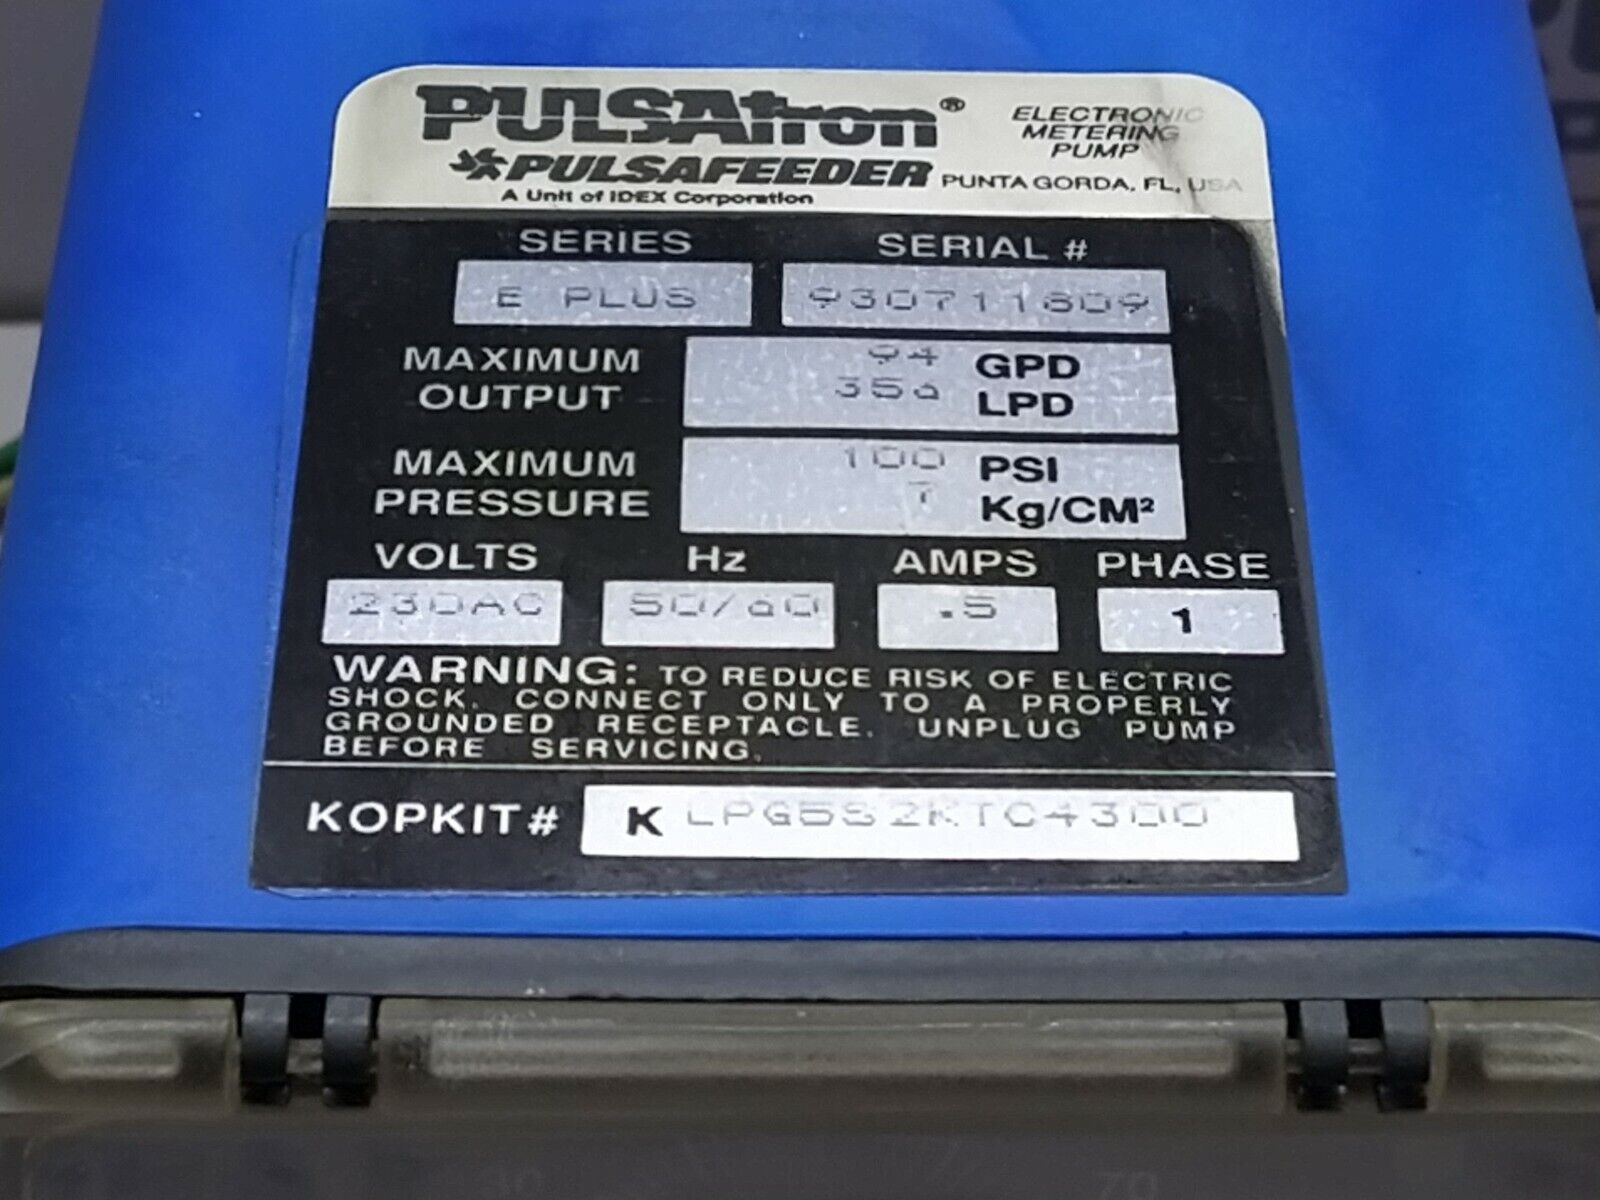 Pulsatron Series E Plus Pulsafeeder KLPG5S2KTC4300 230V AC Electronic Metering 